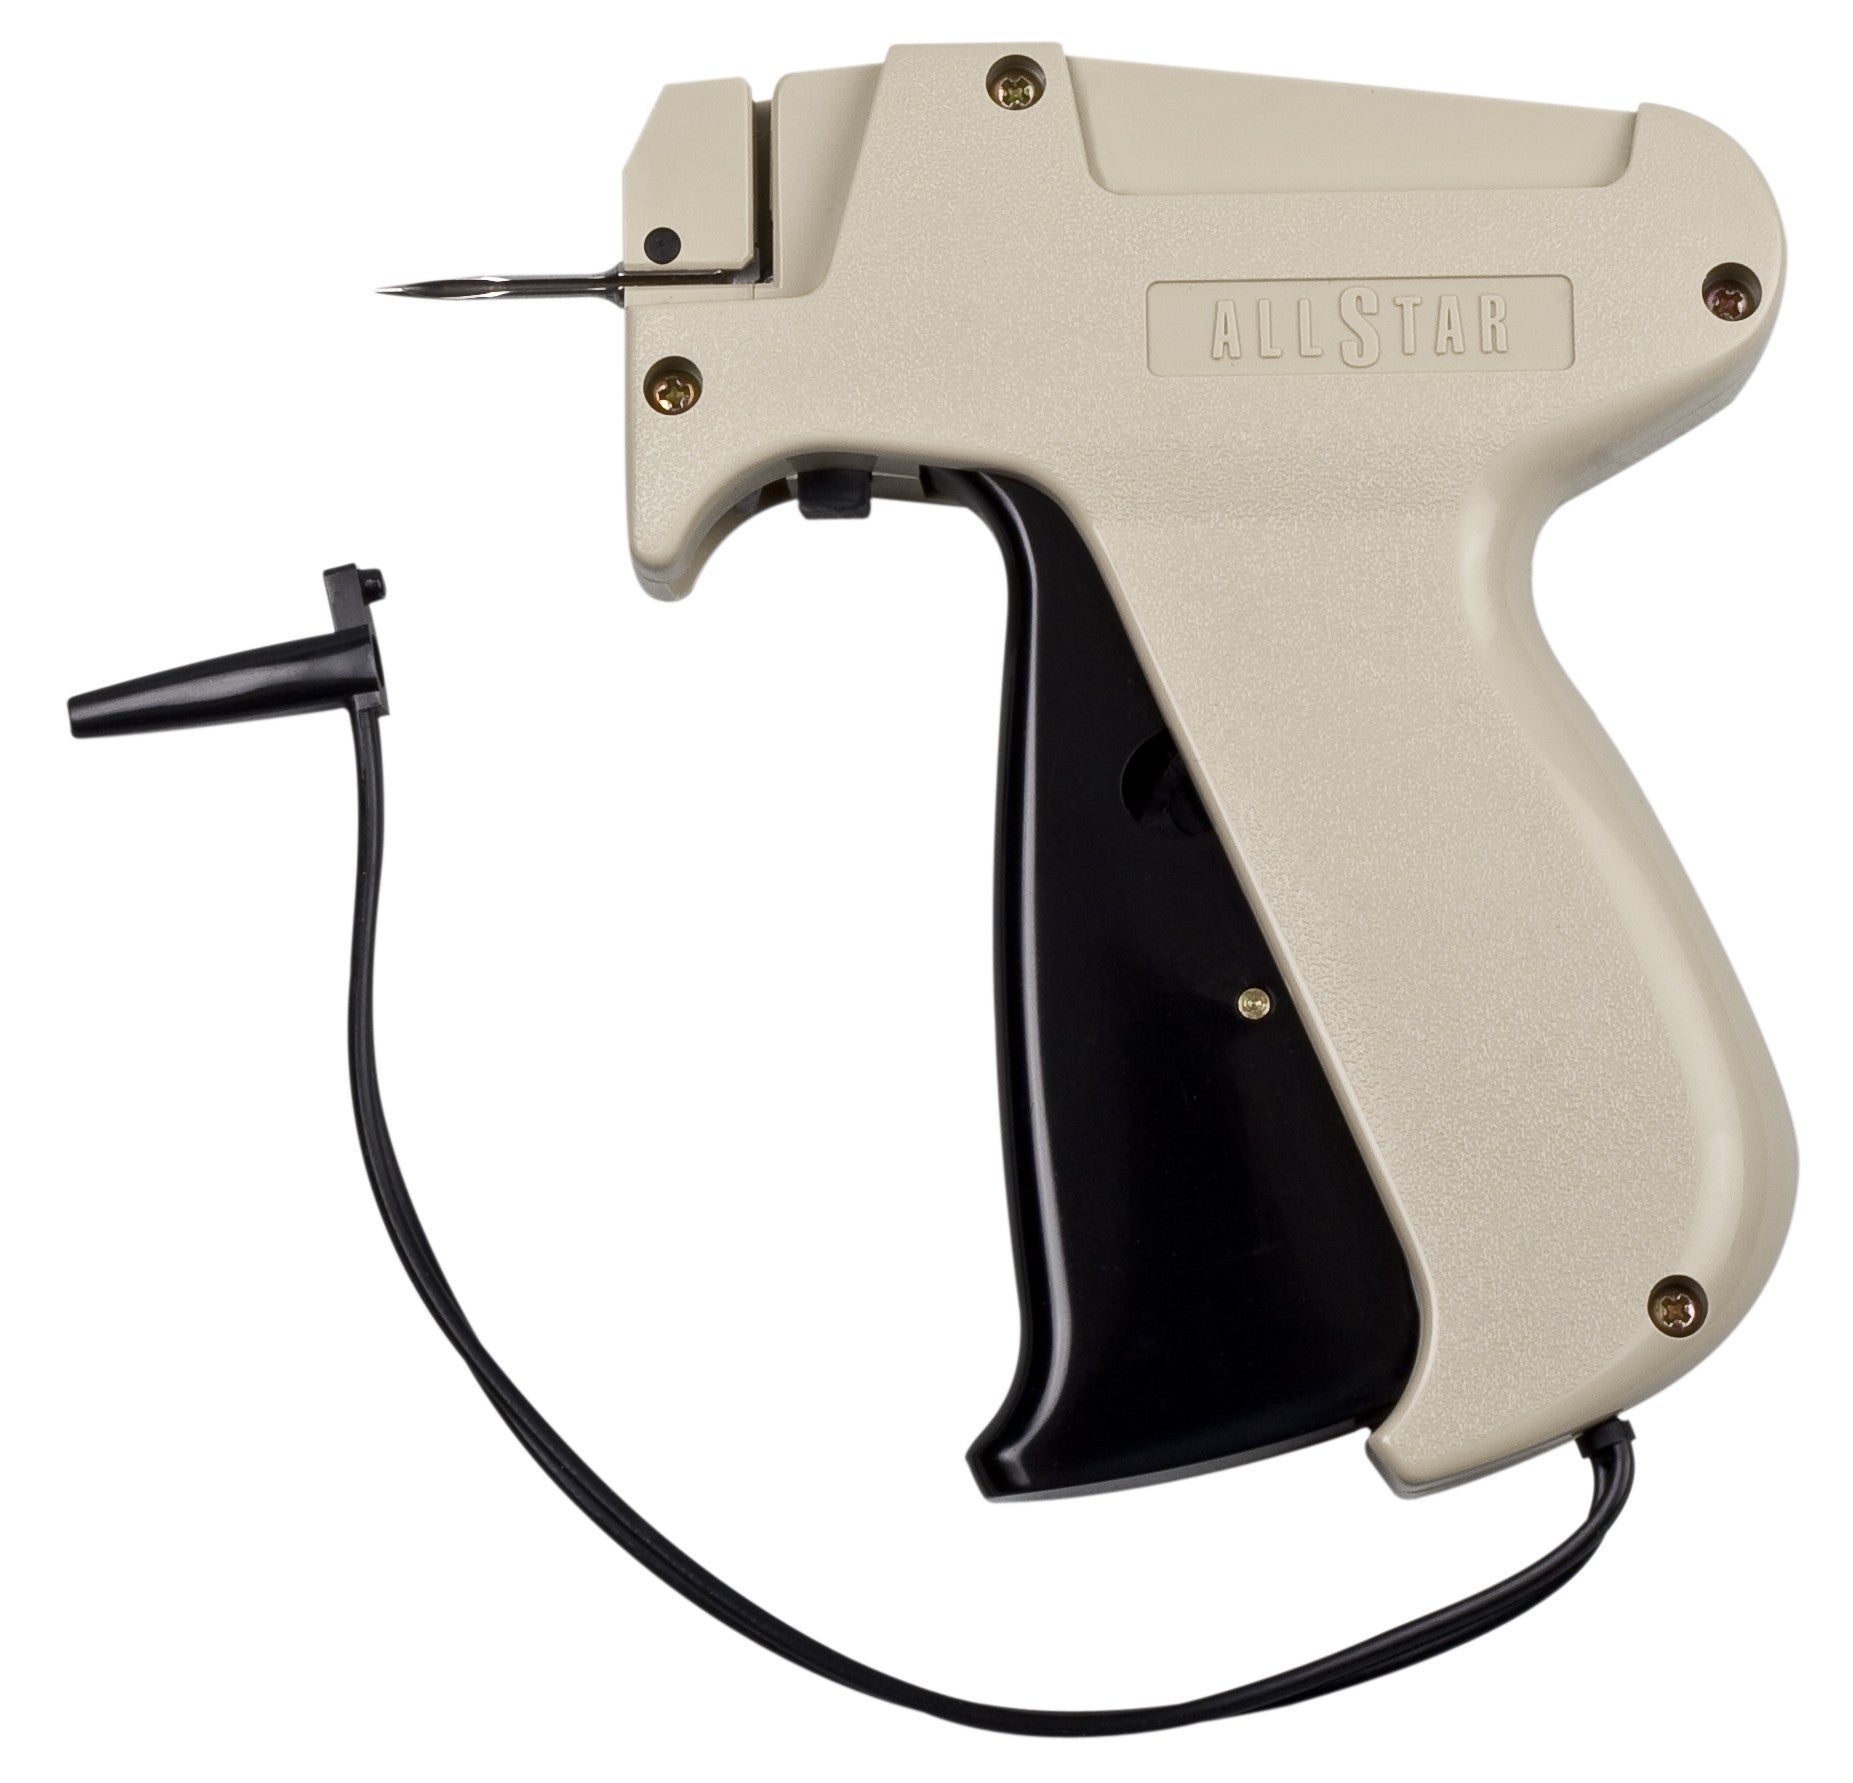 DittaDisplay pistolet textile etiquettes etikettierpistole saga allstar standard